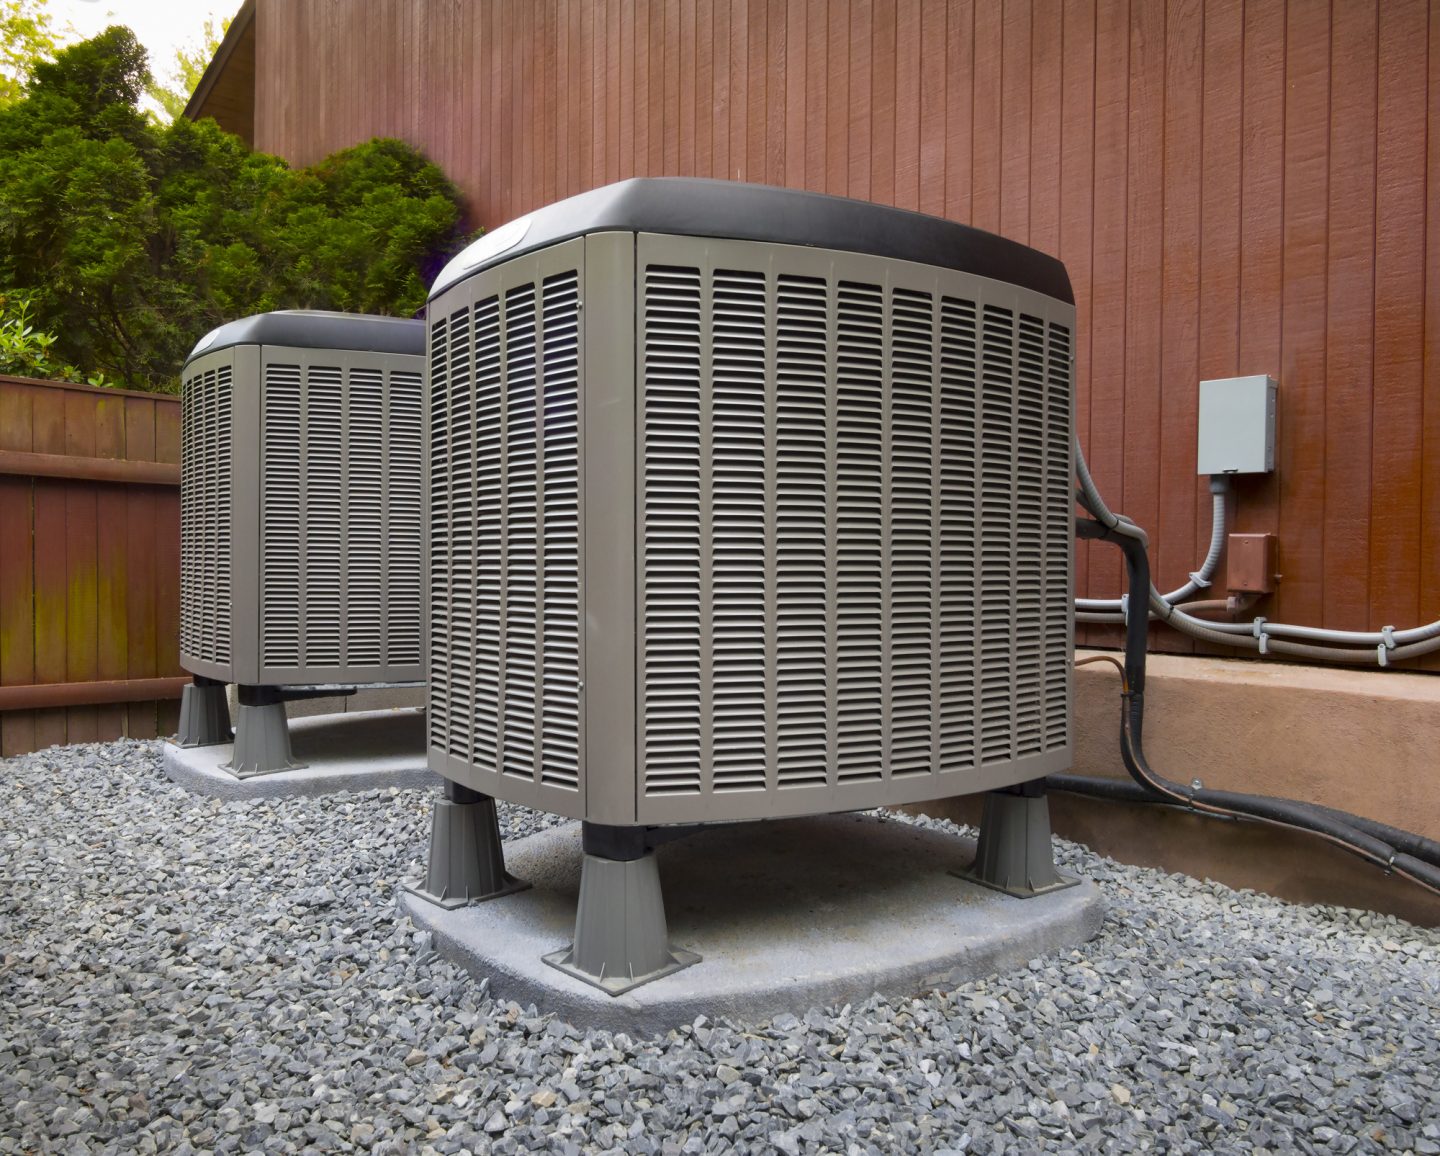 The Fundamental Benefits of Proactive HVAC Maintenance